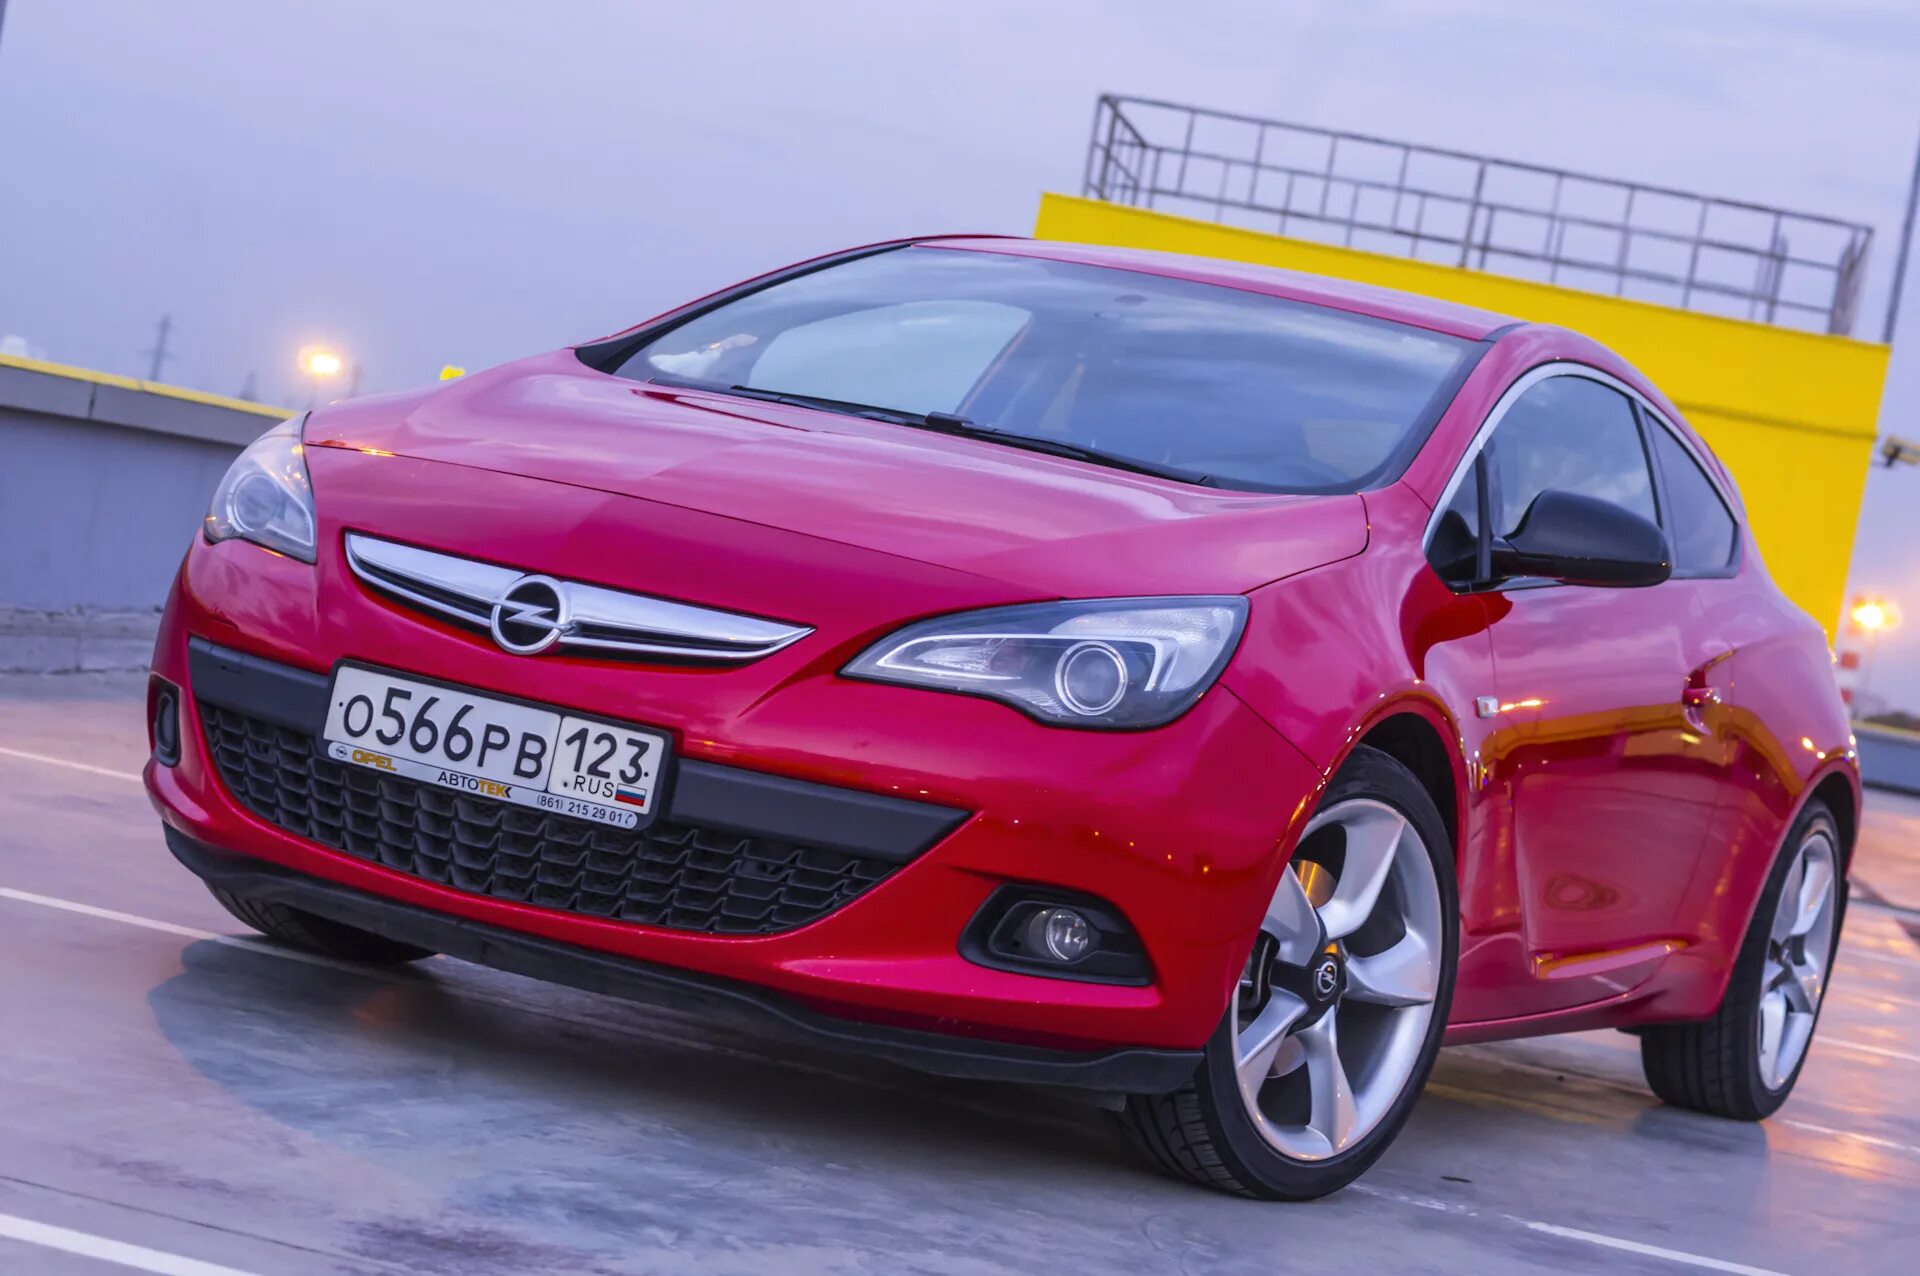 Opel Astra GTC 1.6. Opel Astra GTC Sport 2020. Opel Astra GTC 2016. Opel Astra GTC 2020 купе.